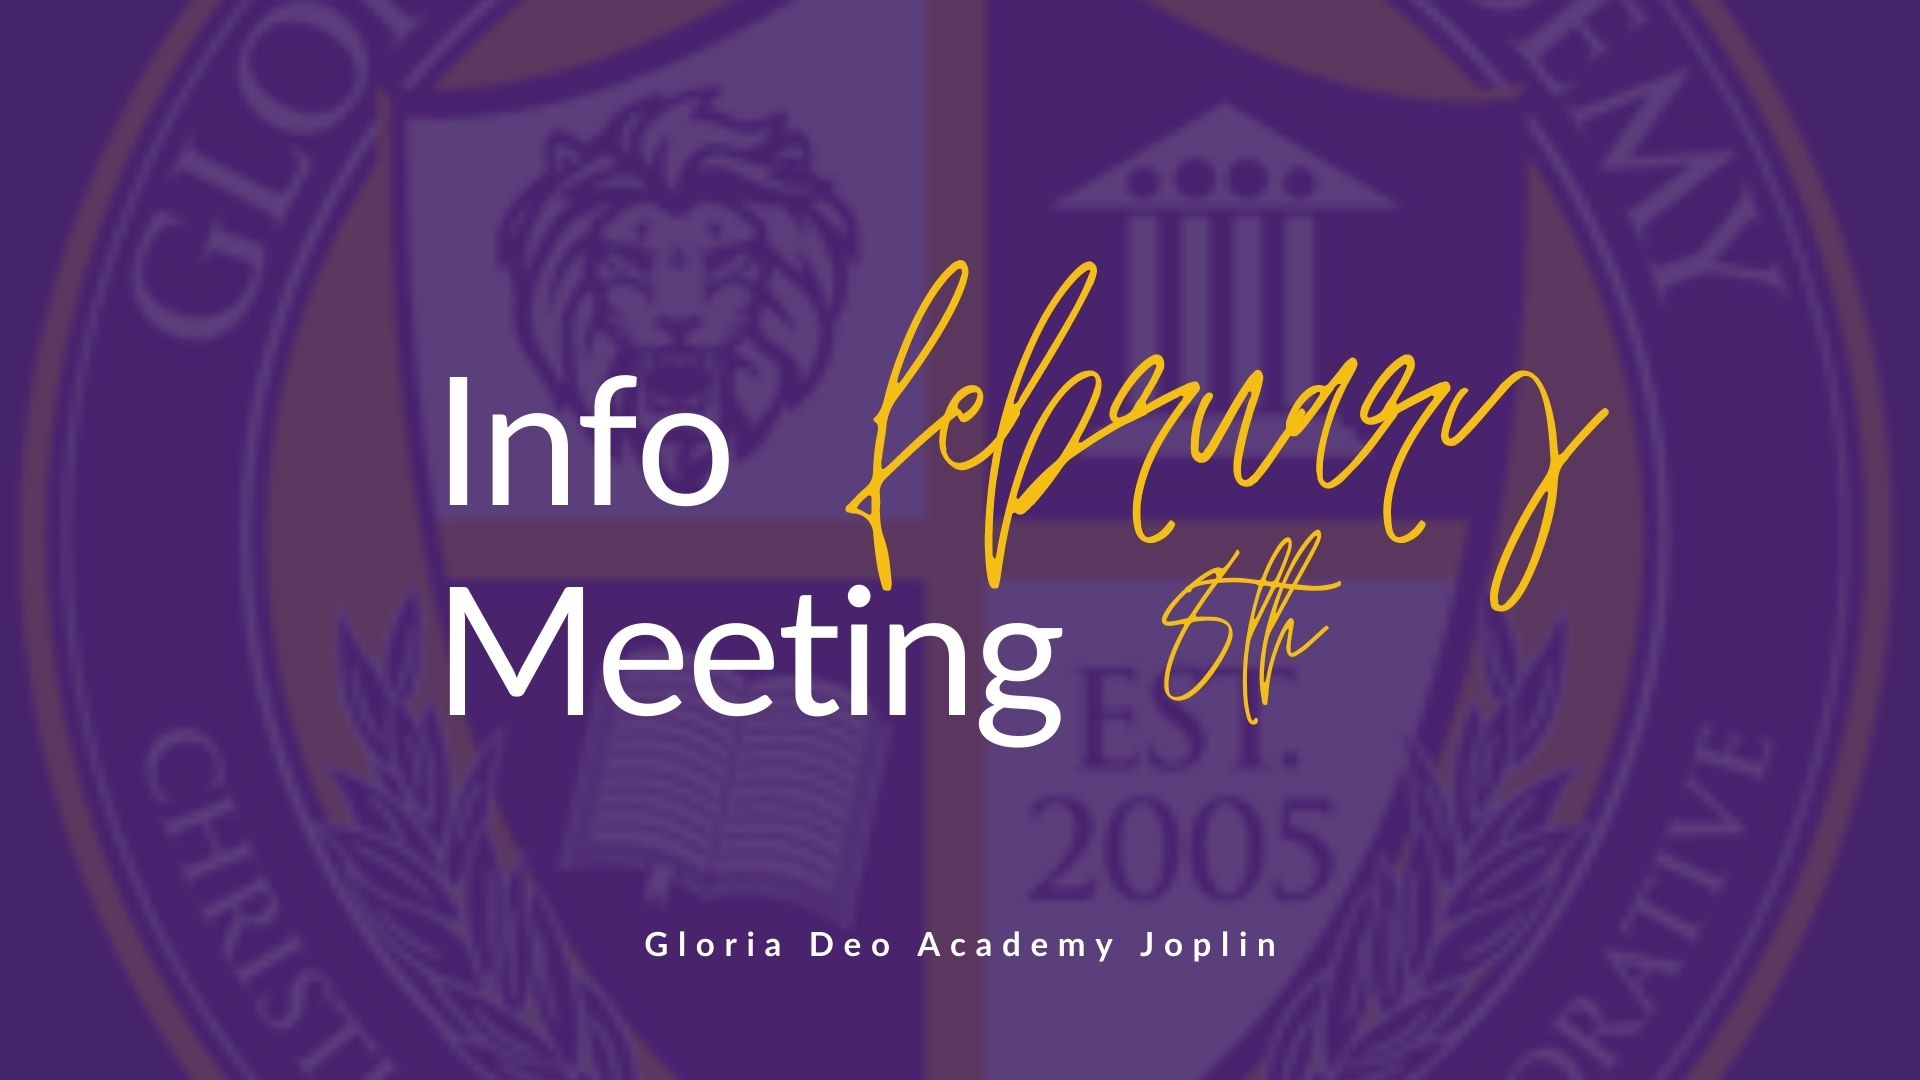 GDA Joplin Campus Info Meeting Feb 2021